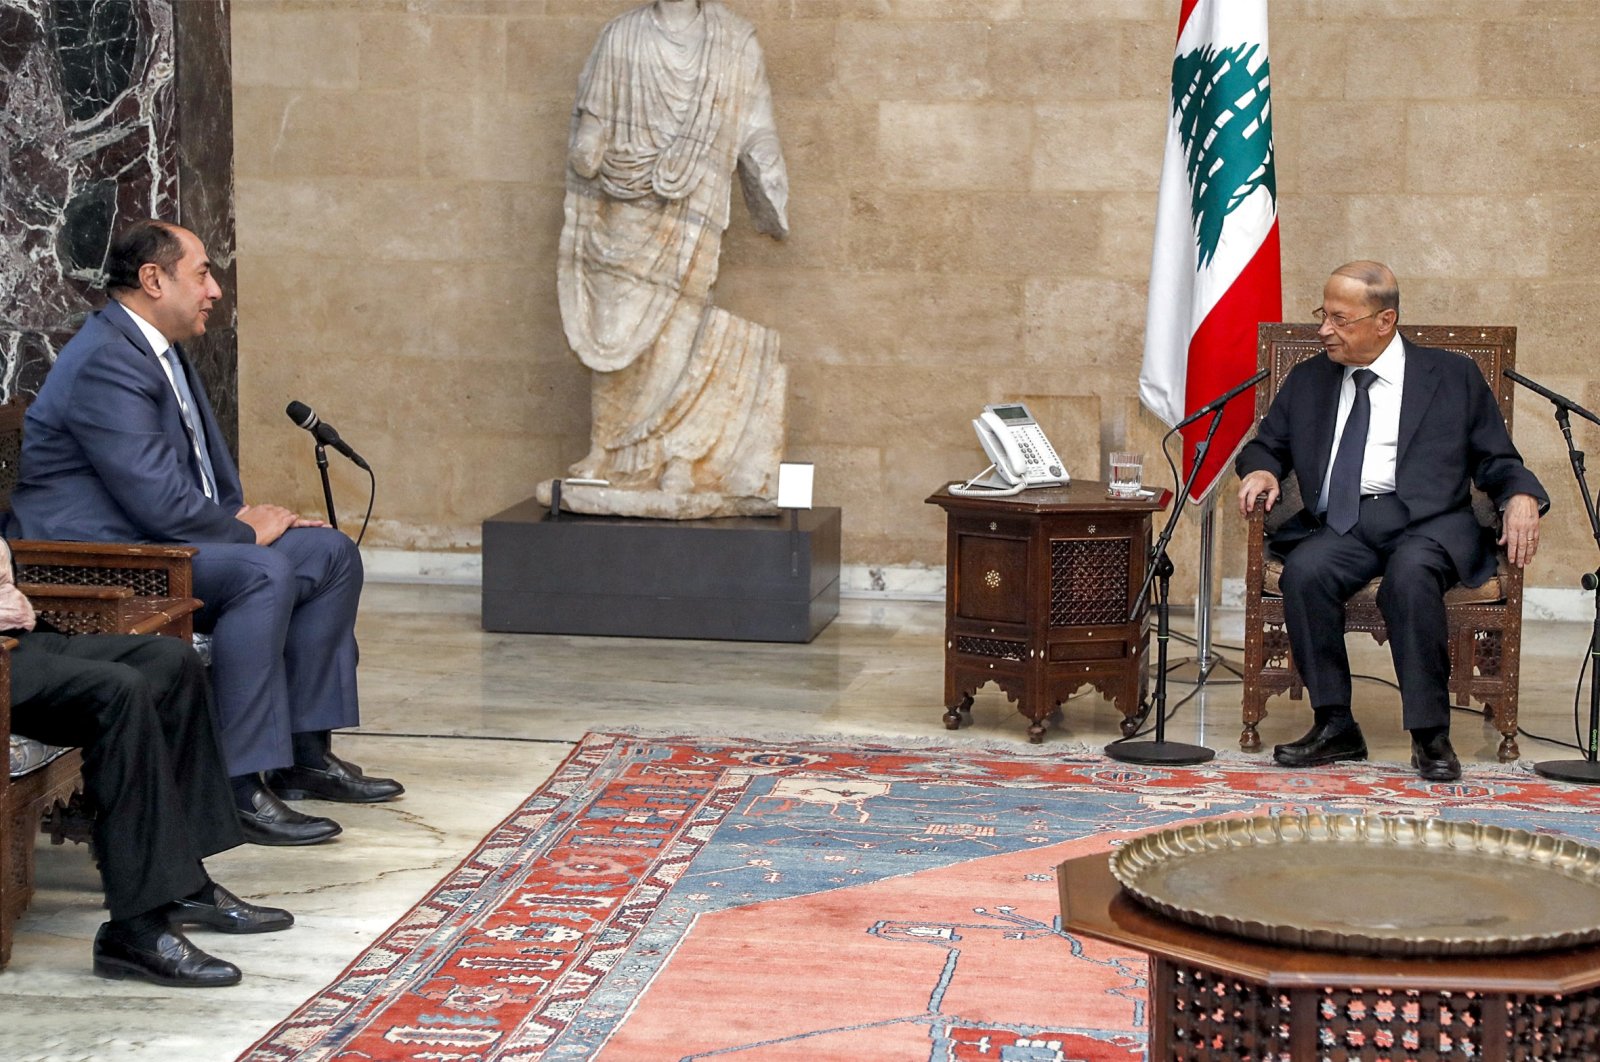 Arab League envoy Hossam Zaki (L) meeting with Lebanon's President Michel Aoun at the presidential palace in Baabda, east of Beirut, Lebanon, Nov. 8, 2021. (Dalati and Nohra via AFP)